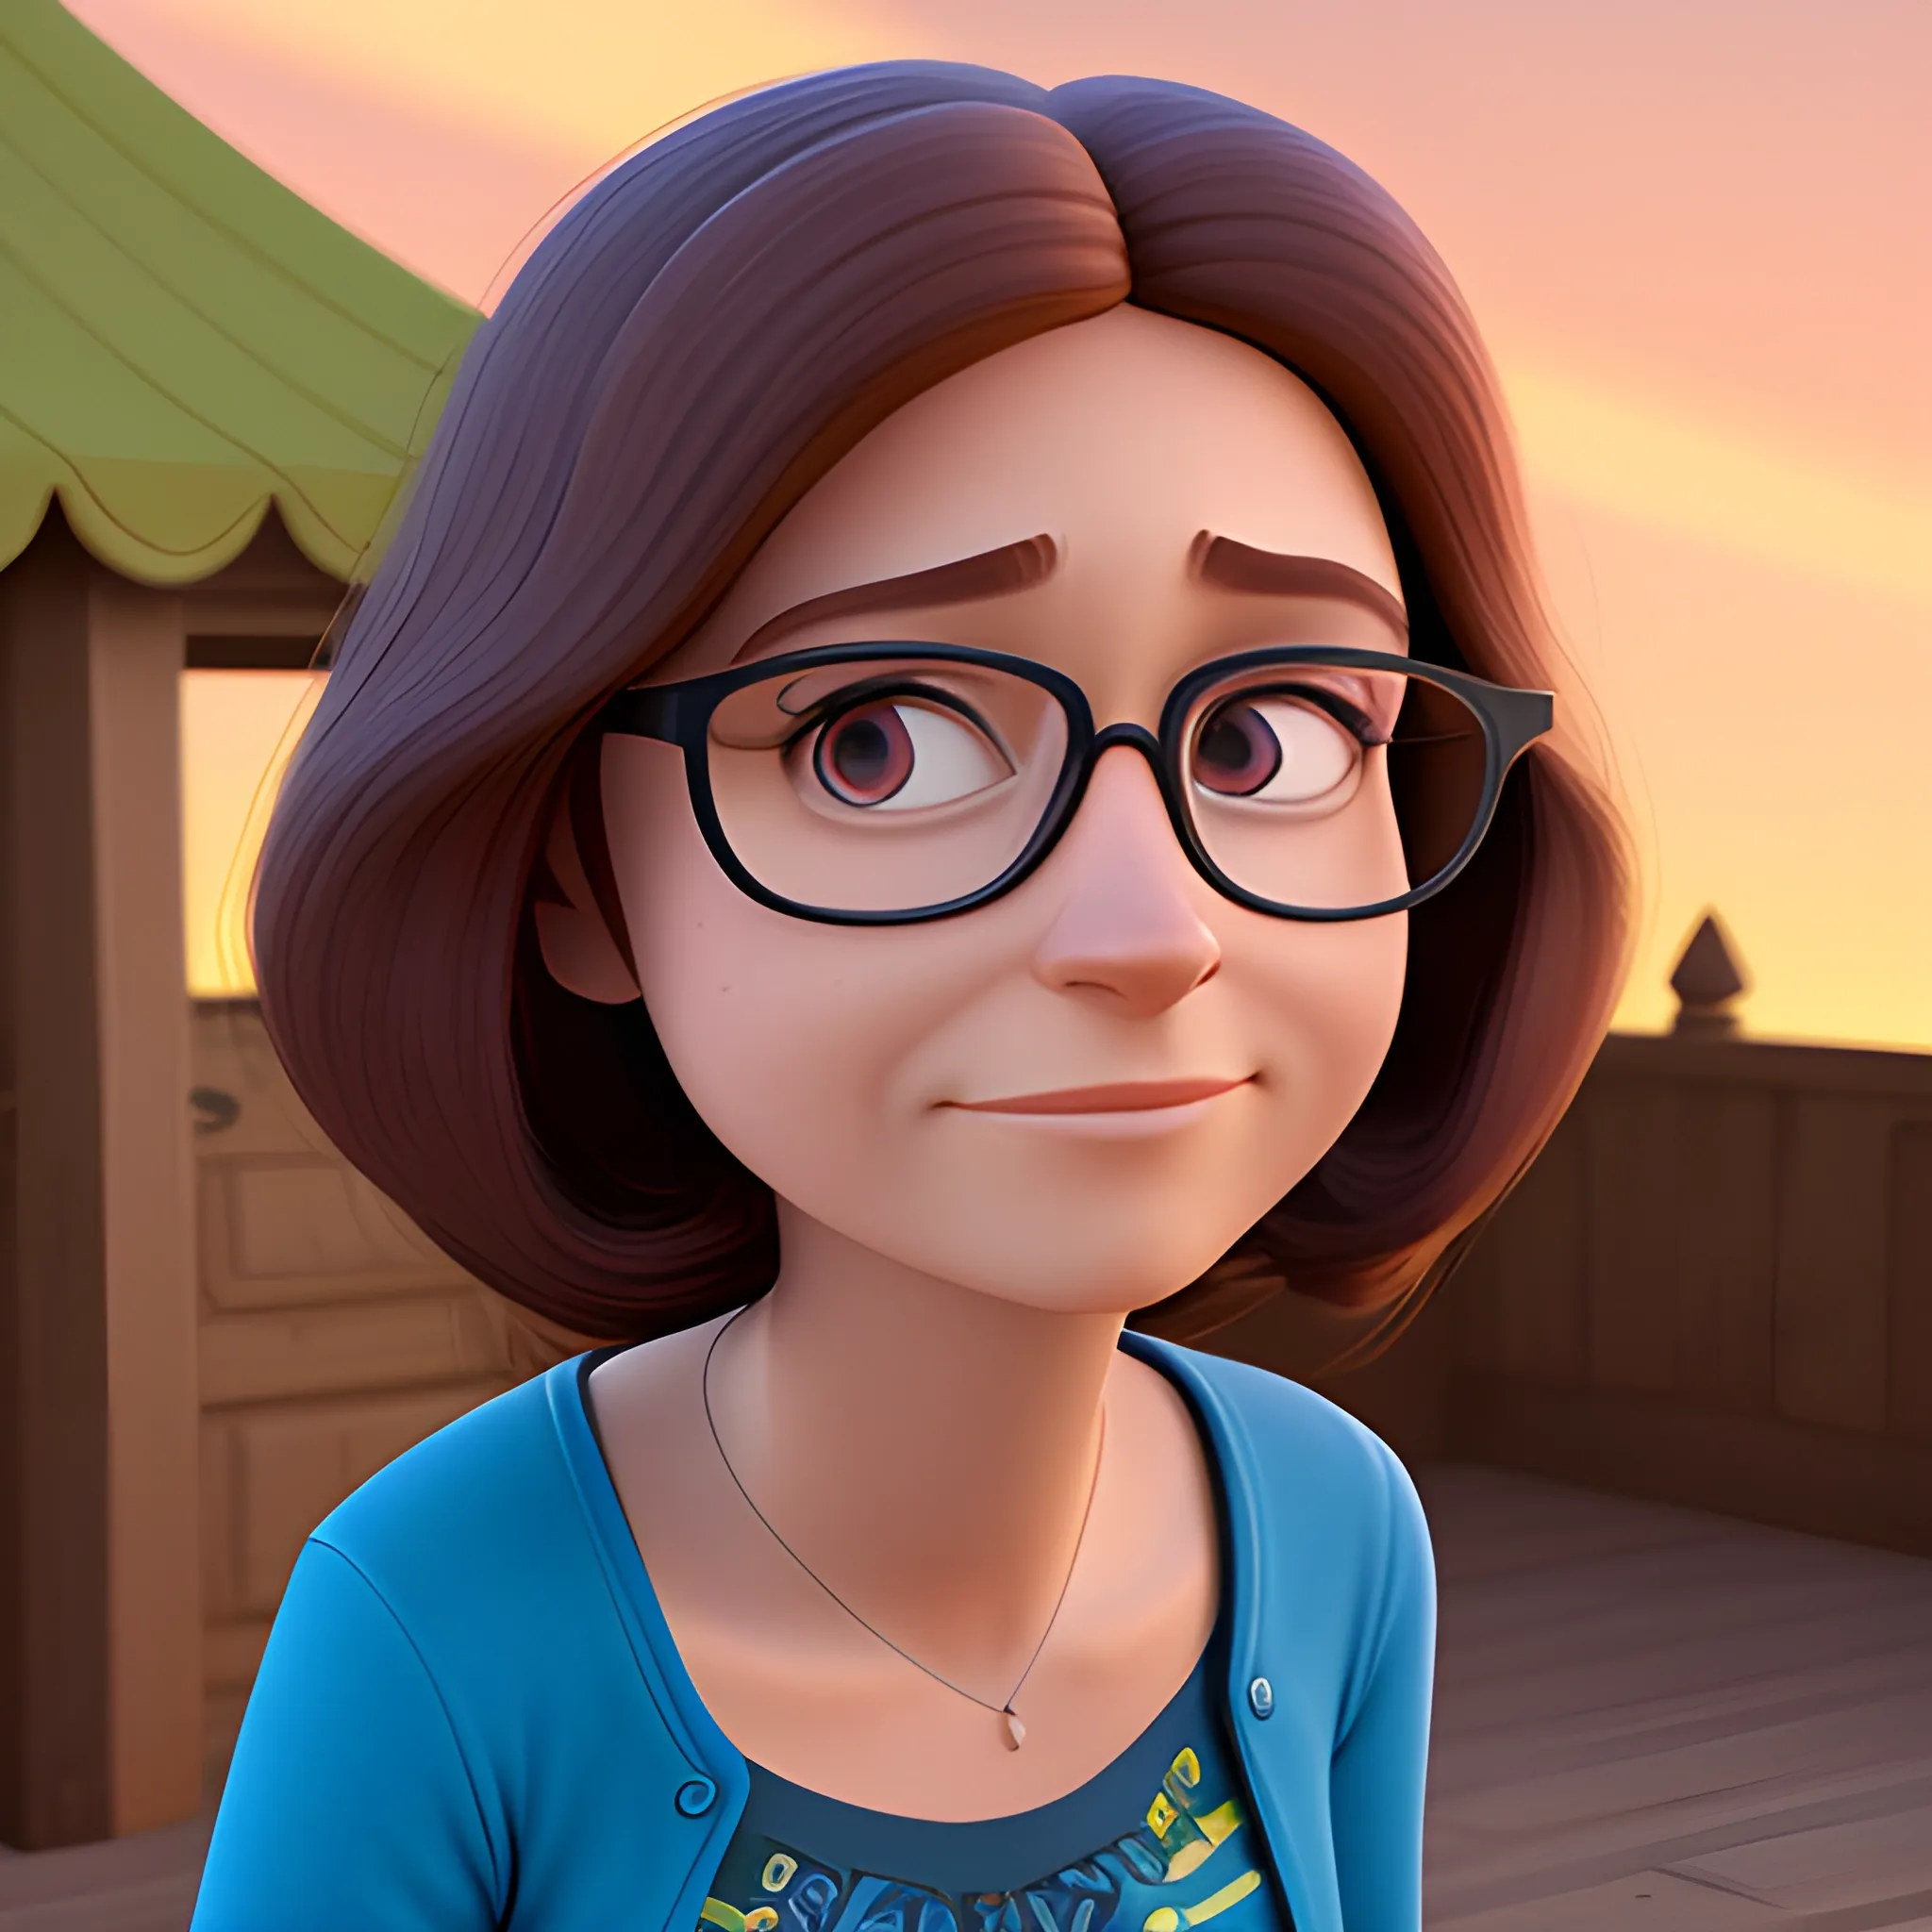 a Disney Pixar Studios character, a woman with shoulder-length hair, wearing glasses. Title "klau", 3D